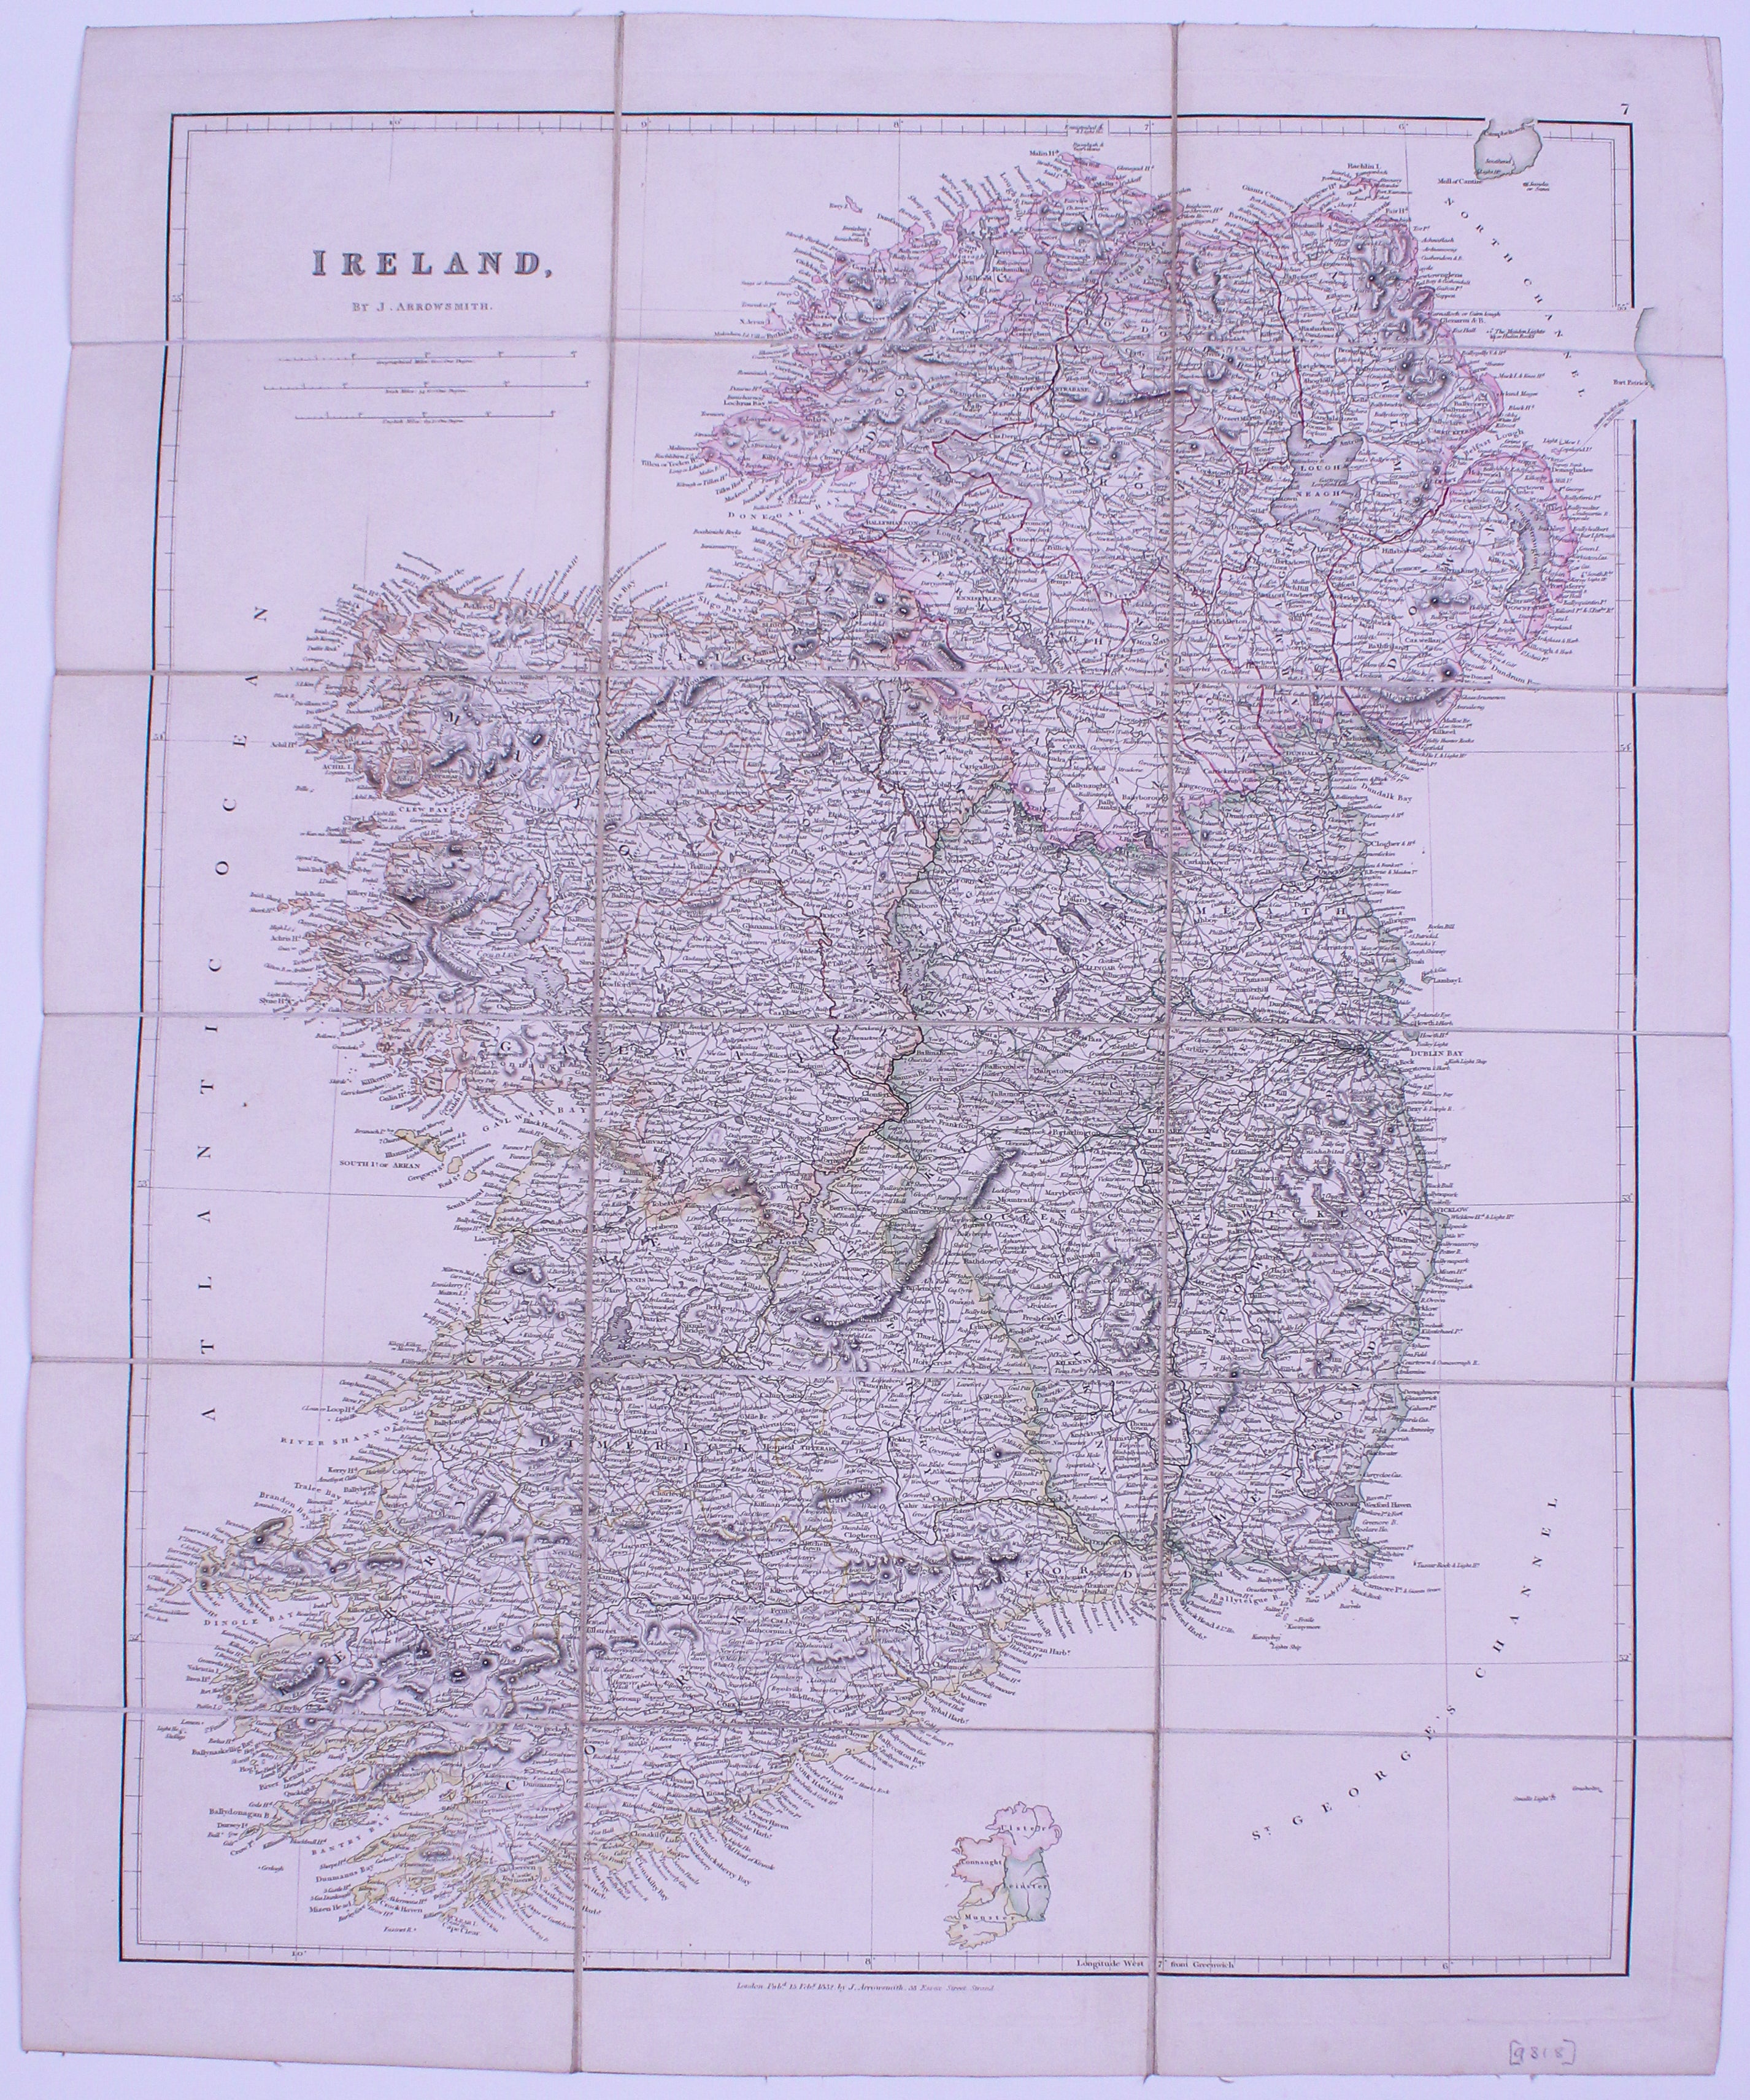 Arrowsmith's Map of Ireland